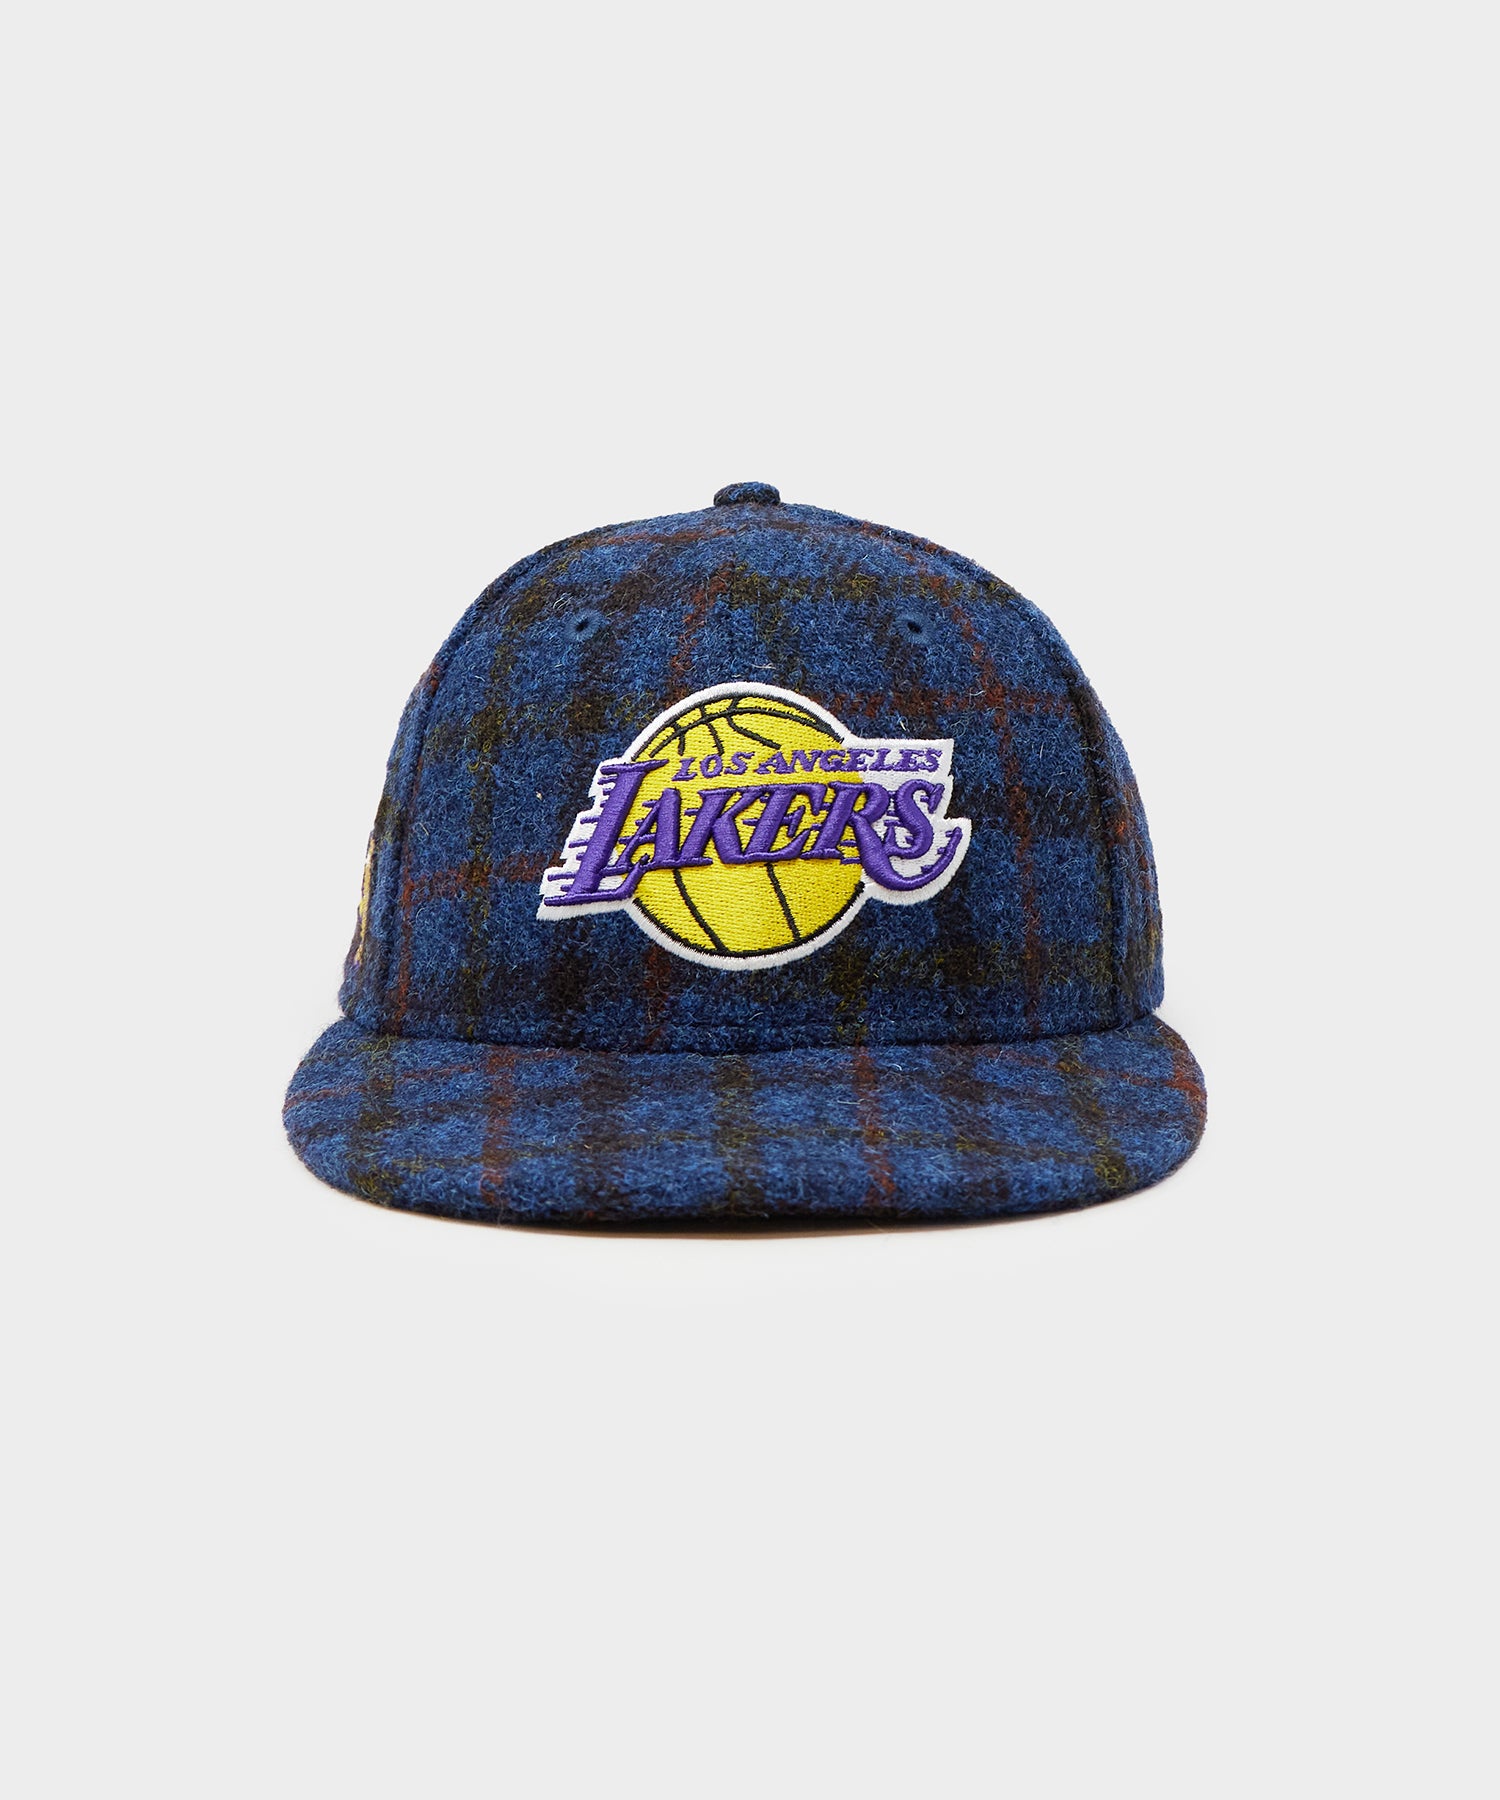 Los Angeles Lakers Hats, Lakers Snapback, Baseball Cap